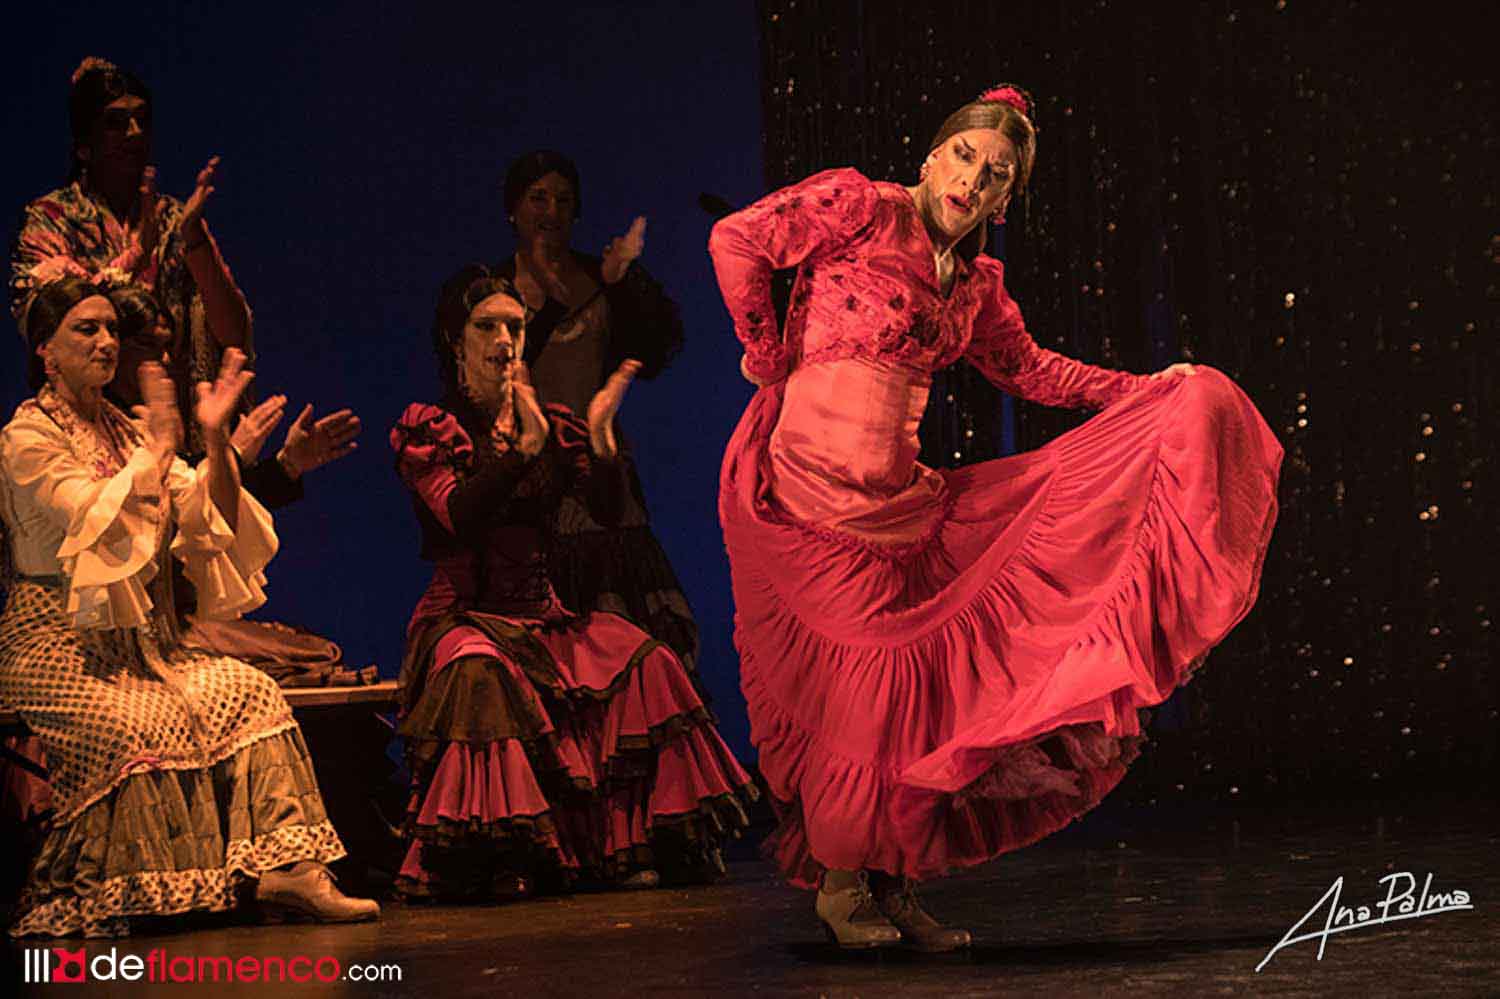 ¡Viva! Manuel Liñan – Festival de Jerez Liñán, pride of flamenco